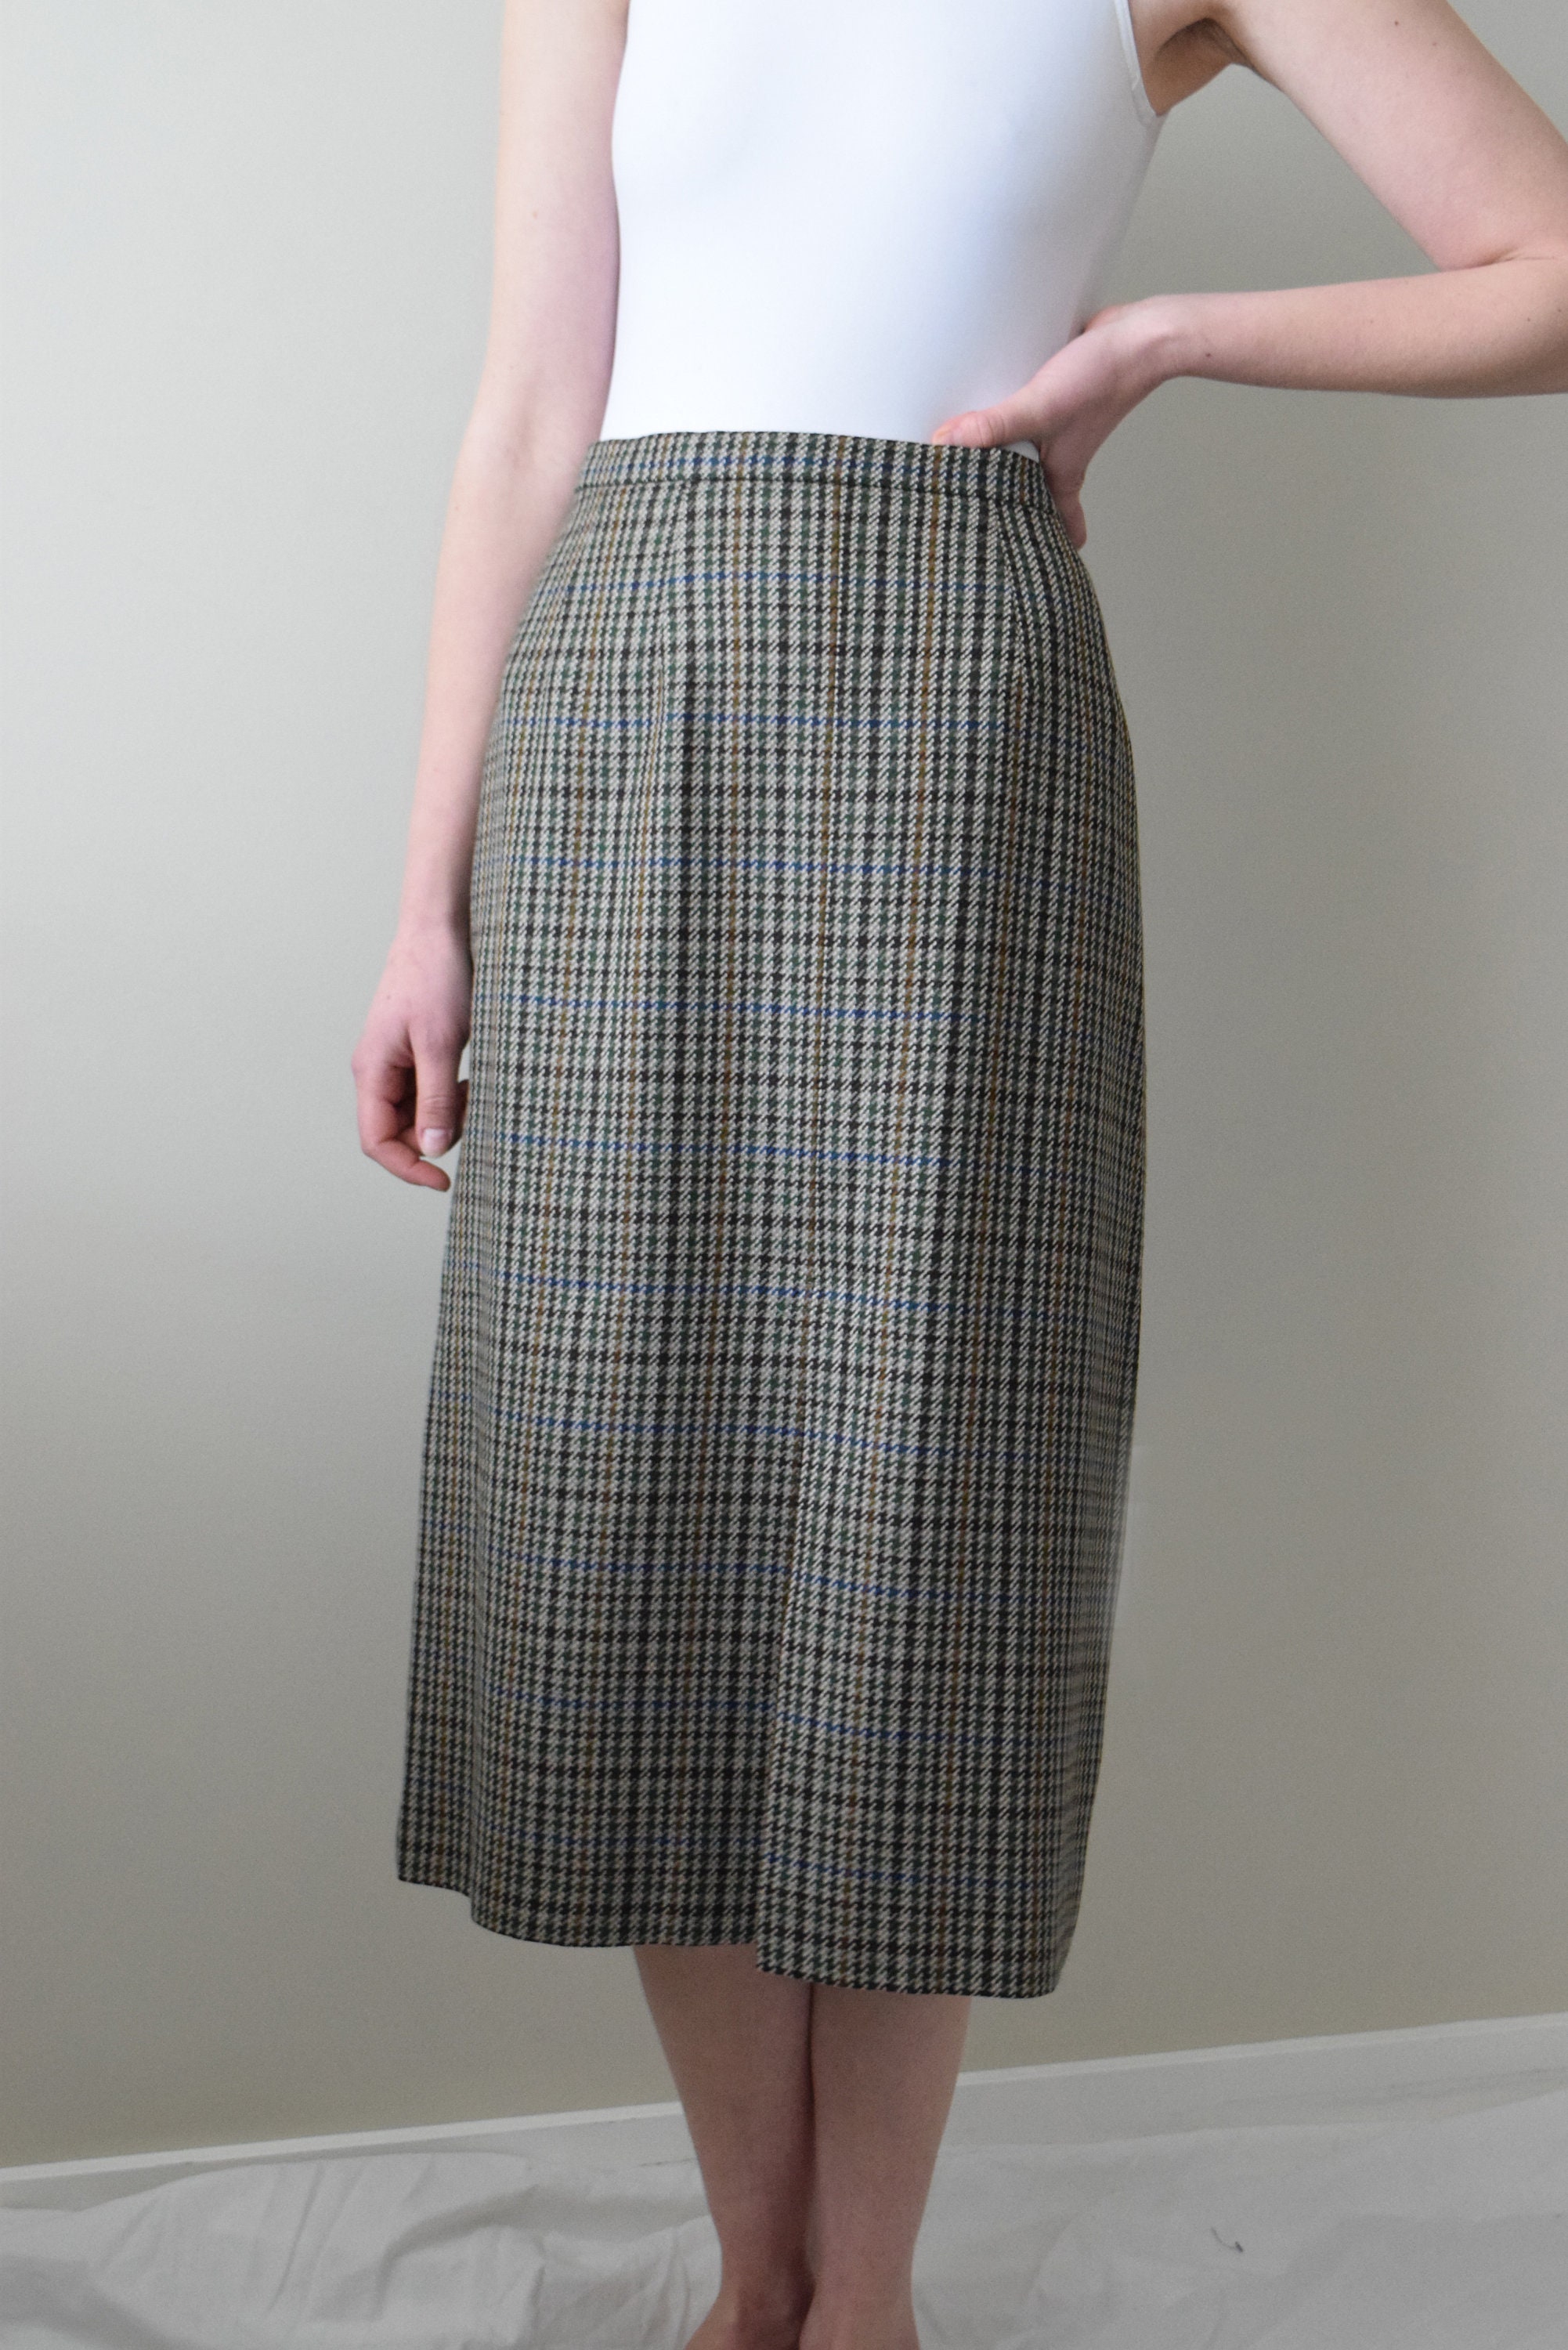 Burberry Houndstooth Skirt.